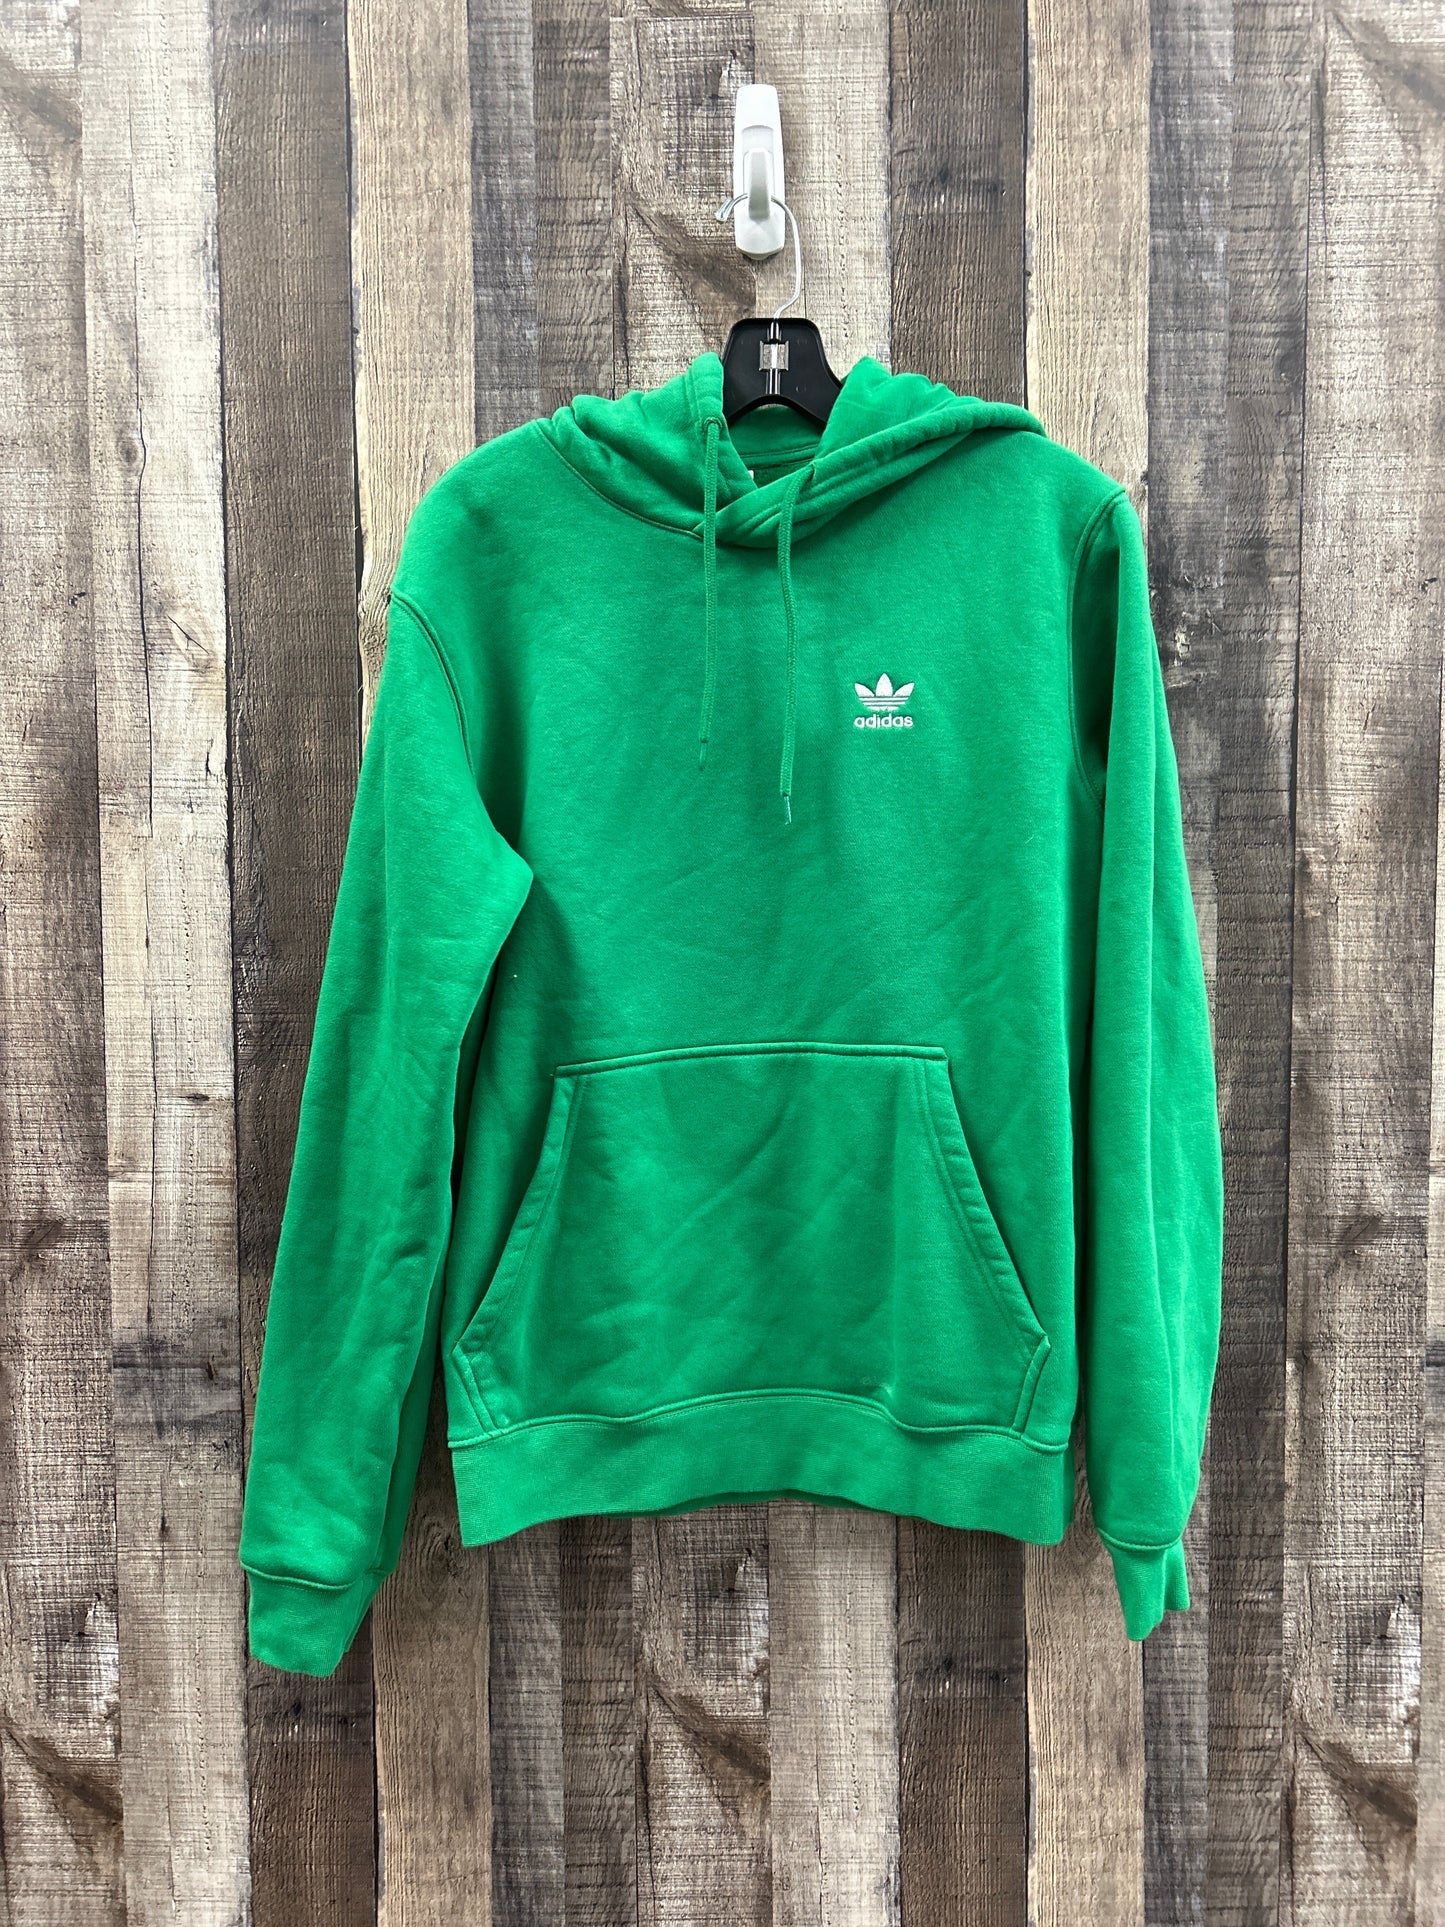 Green Sweatshirt Hoodie Adidas, Size M